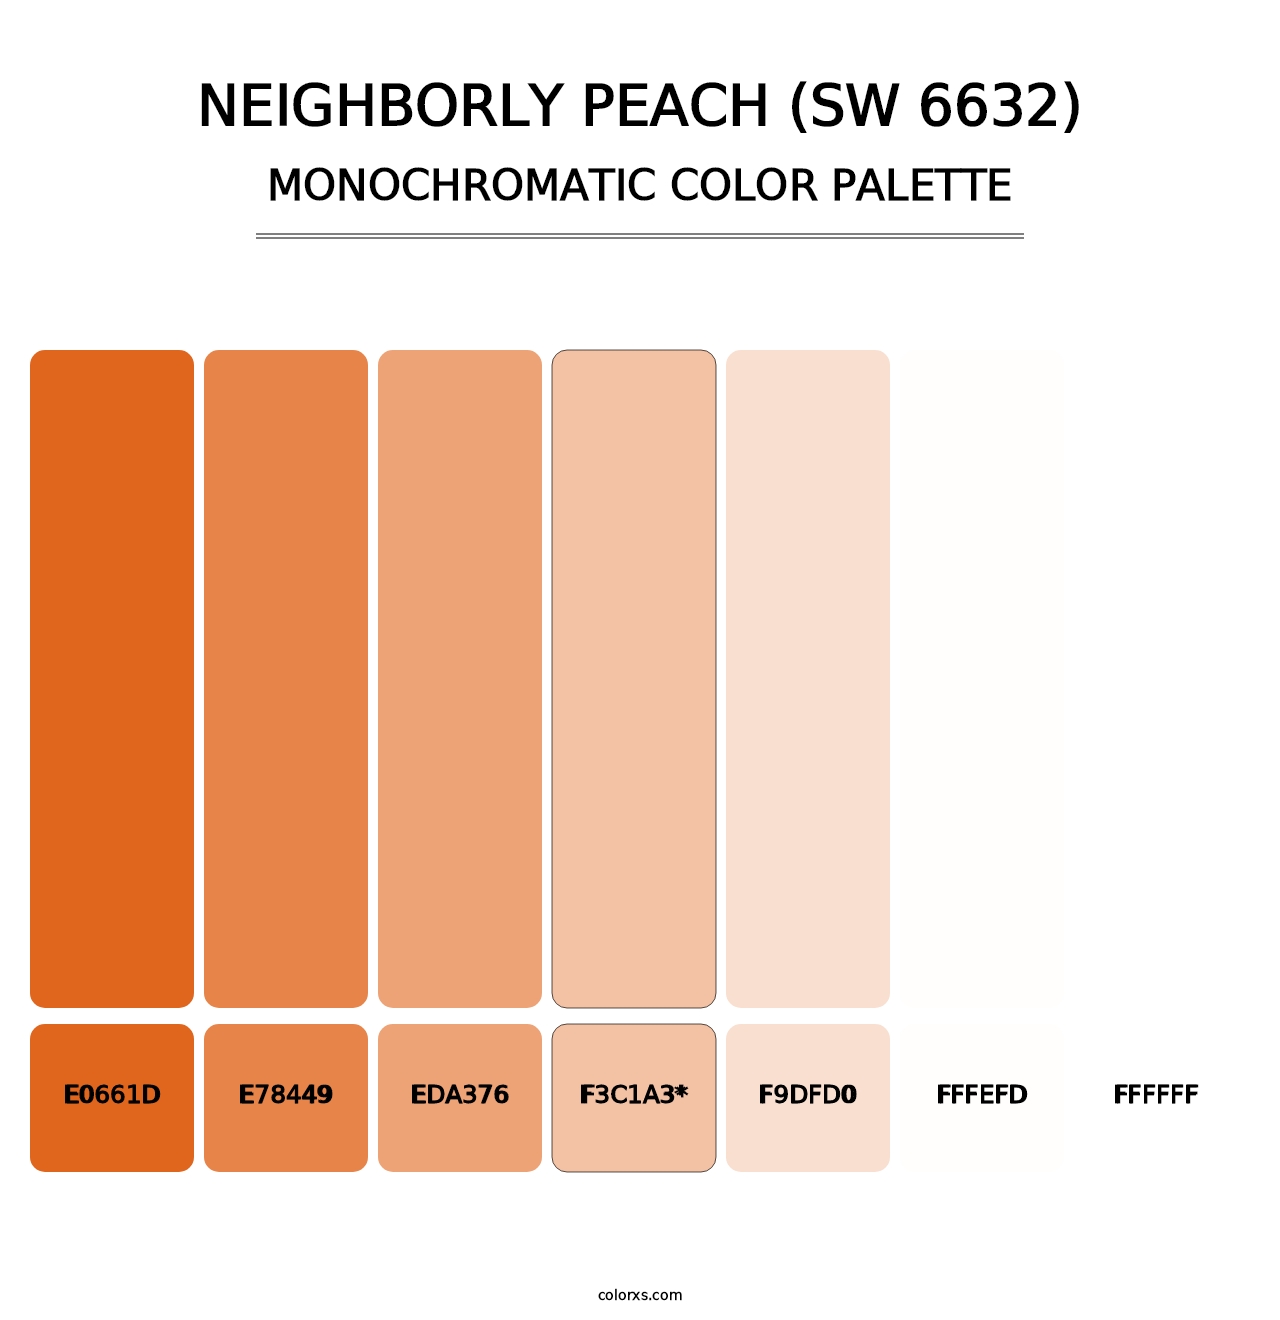 Neighborly Peach (SW 6632) - Monochromatic Color Palette